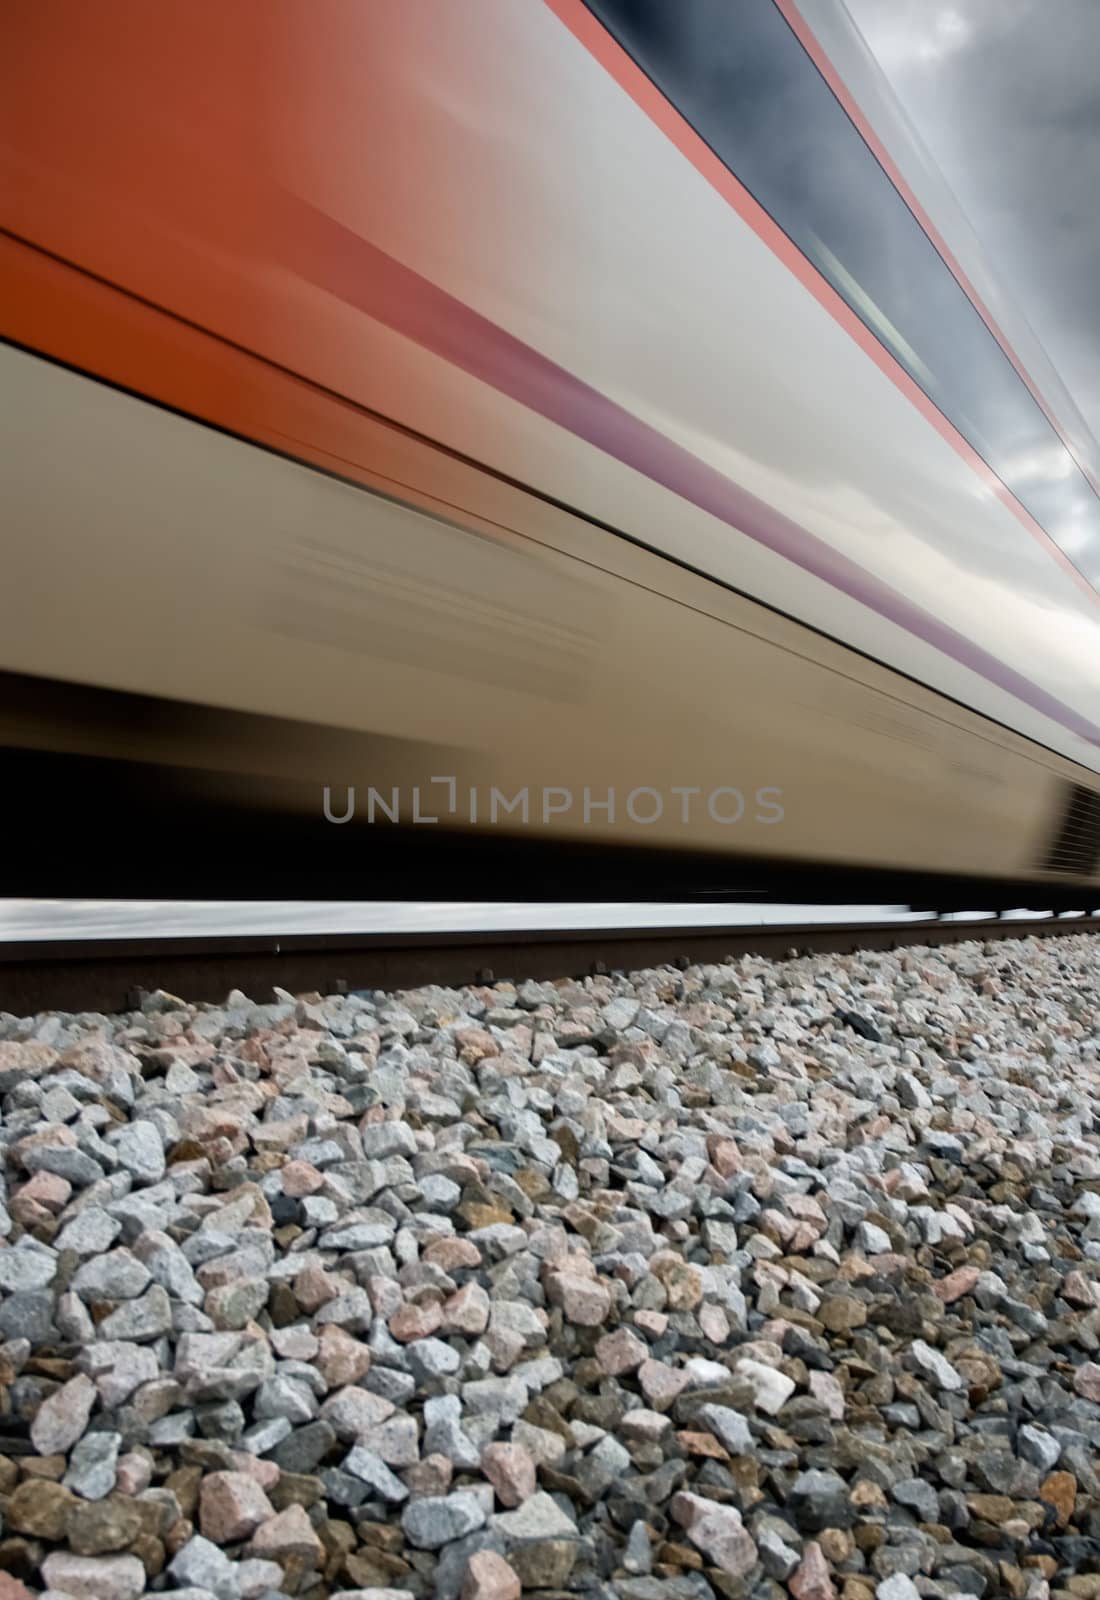 A train in movement. Speed symbol